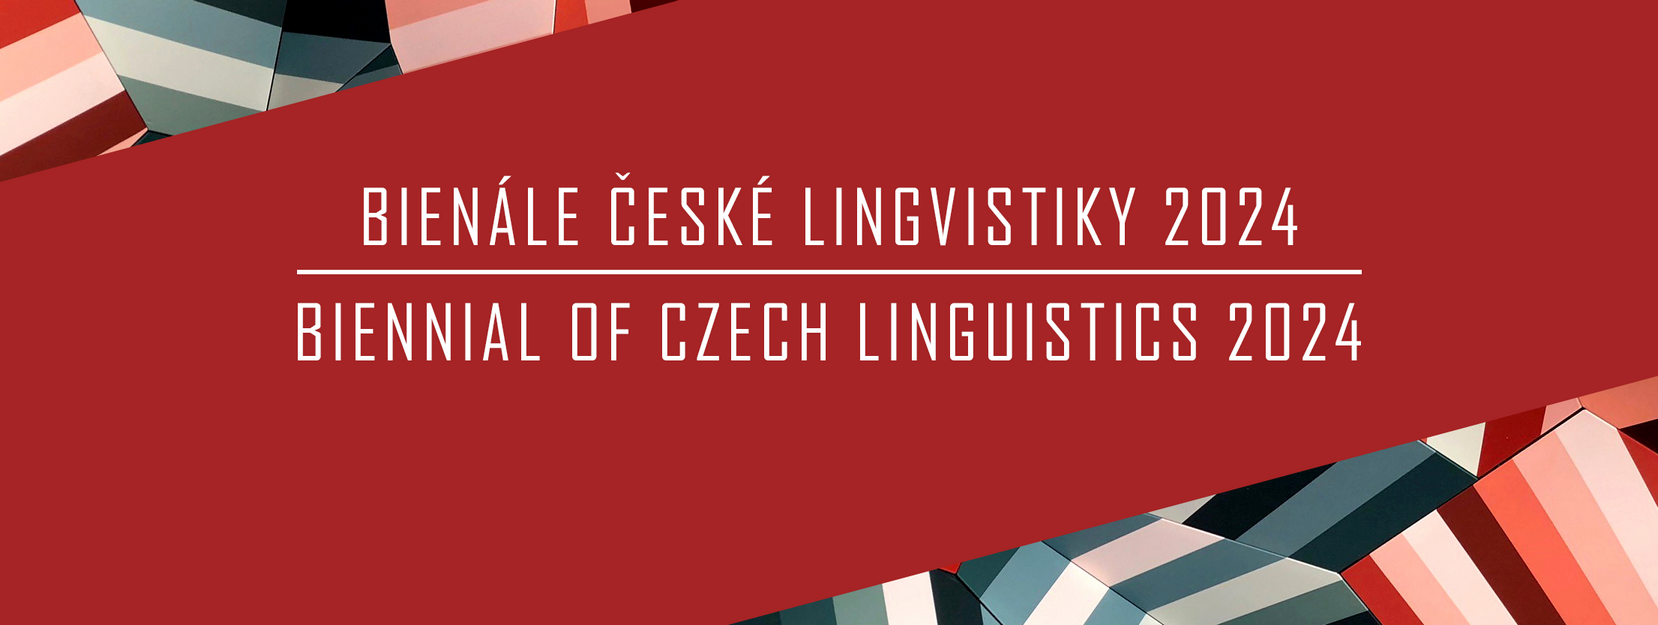 Bienále české lingvistiky 2024